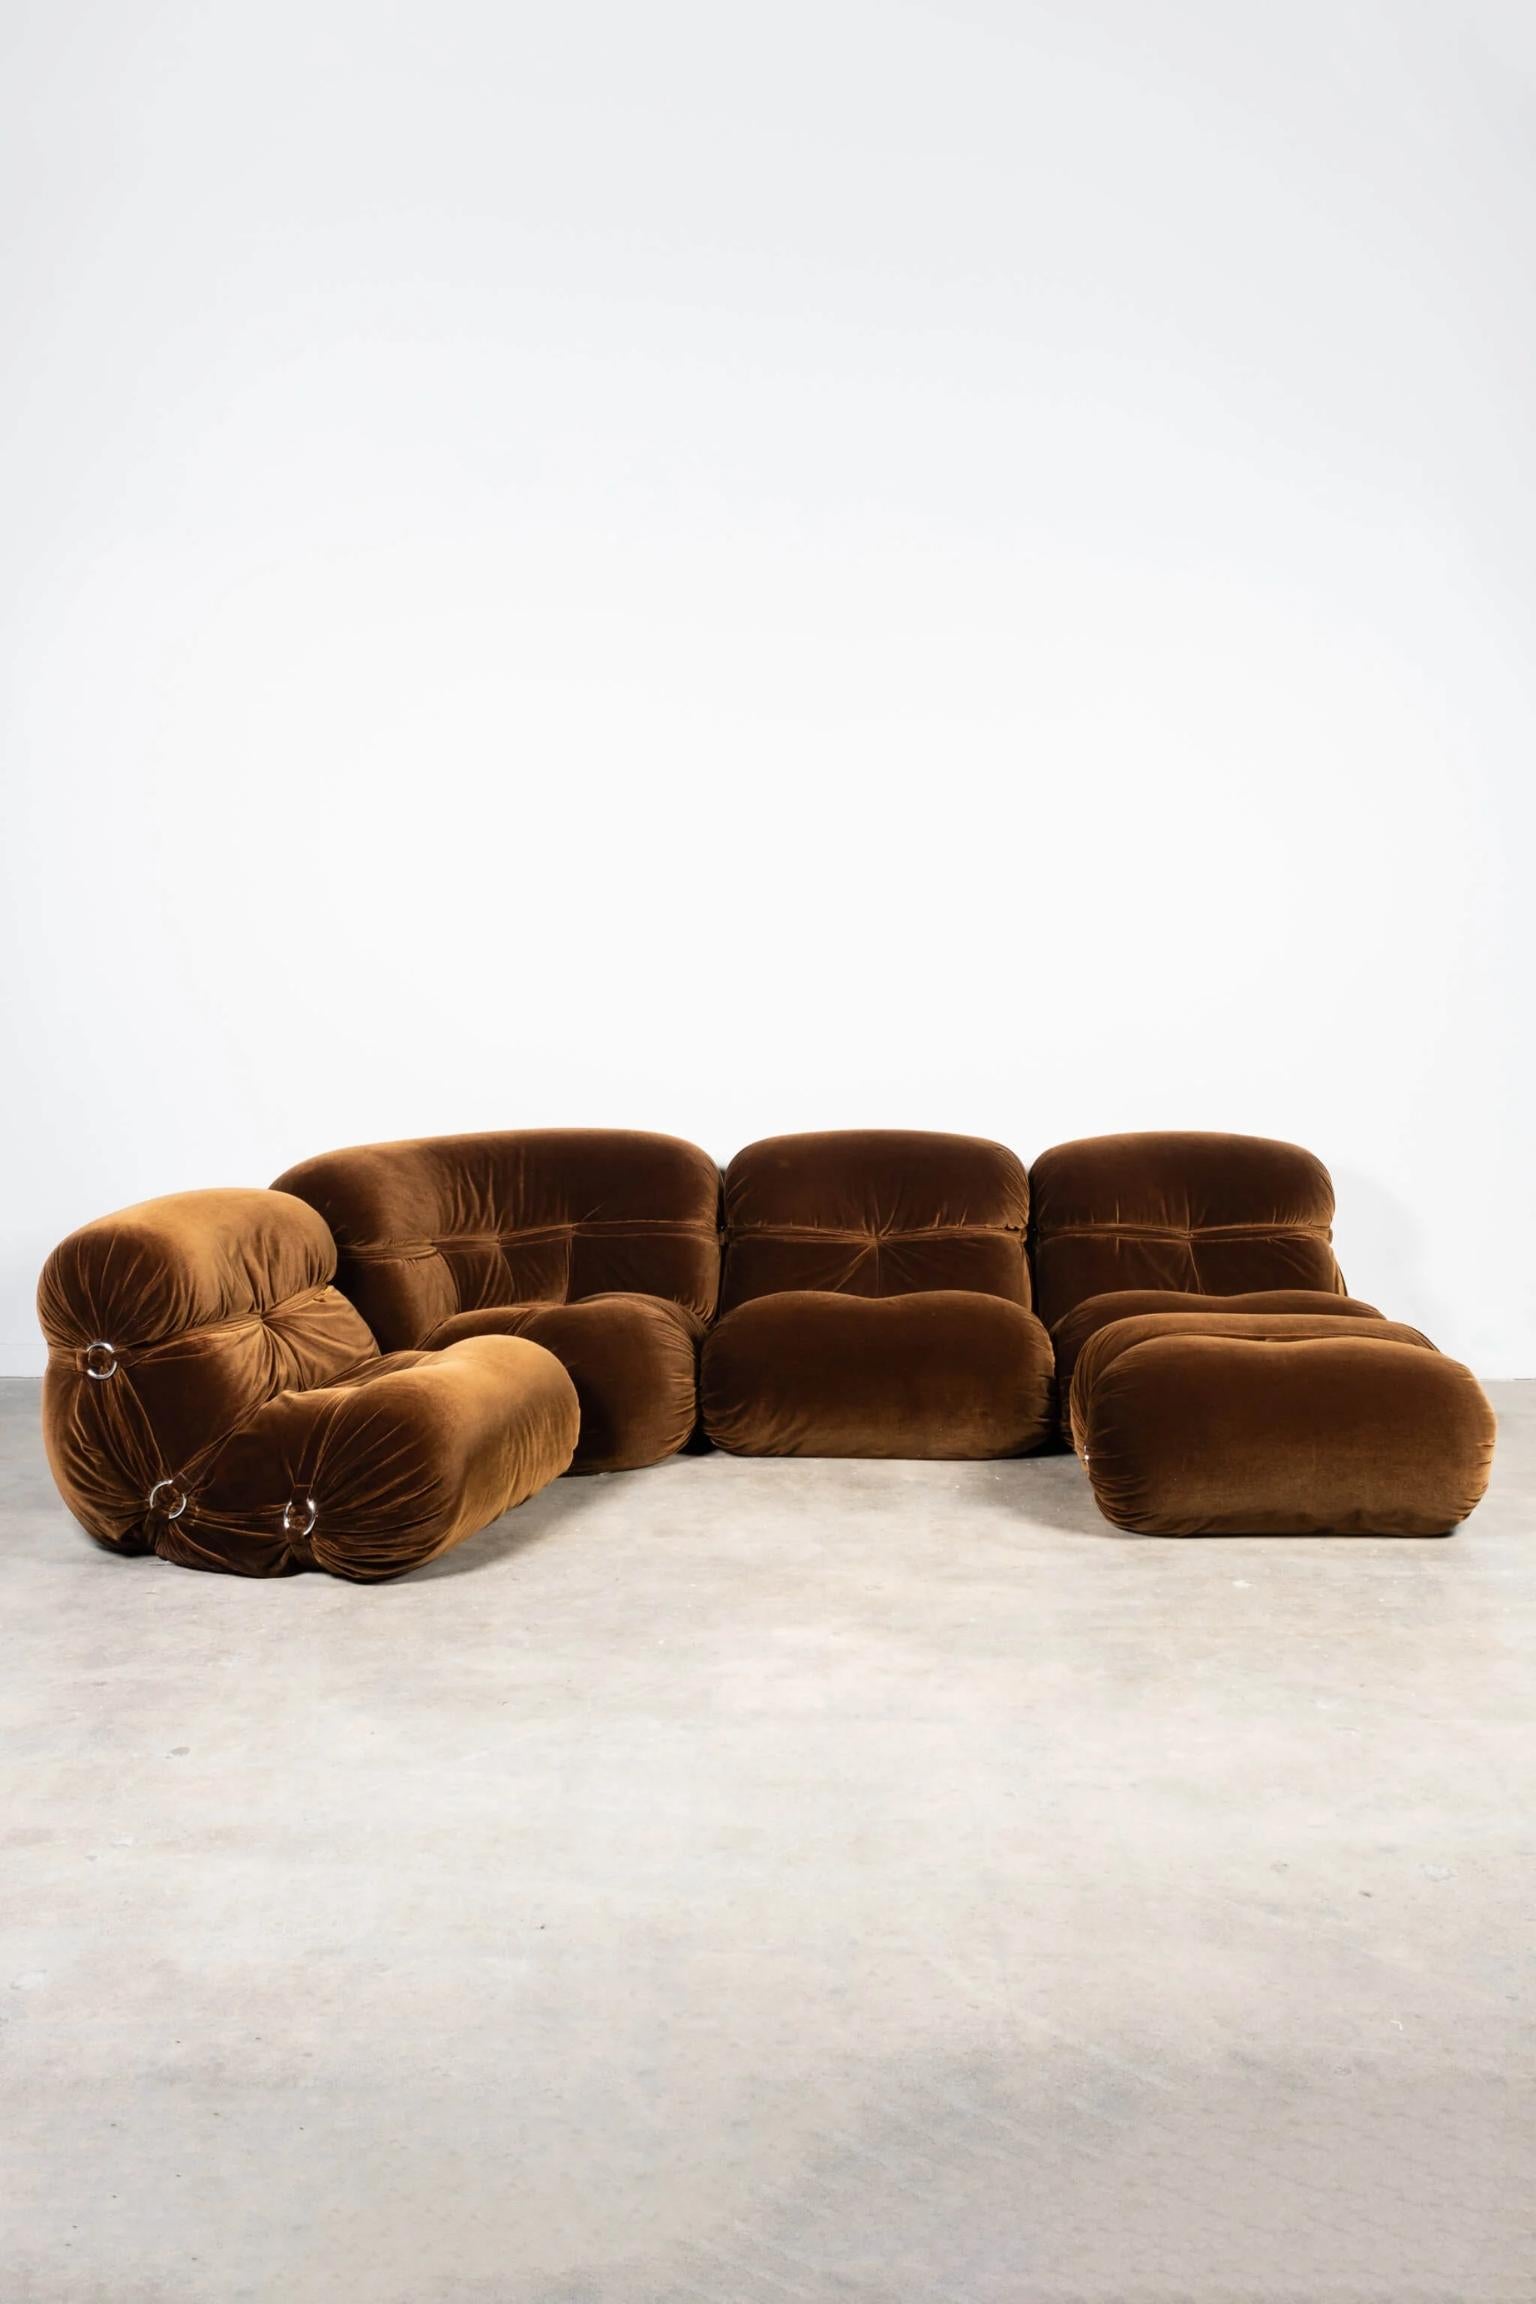 1970s 5 piece Modular Sofa in Original Chocolate Brown Velvet For Sale 1